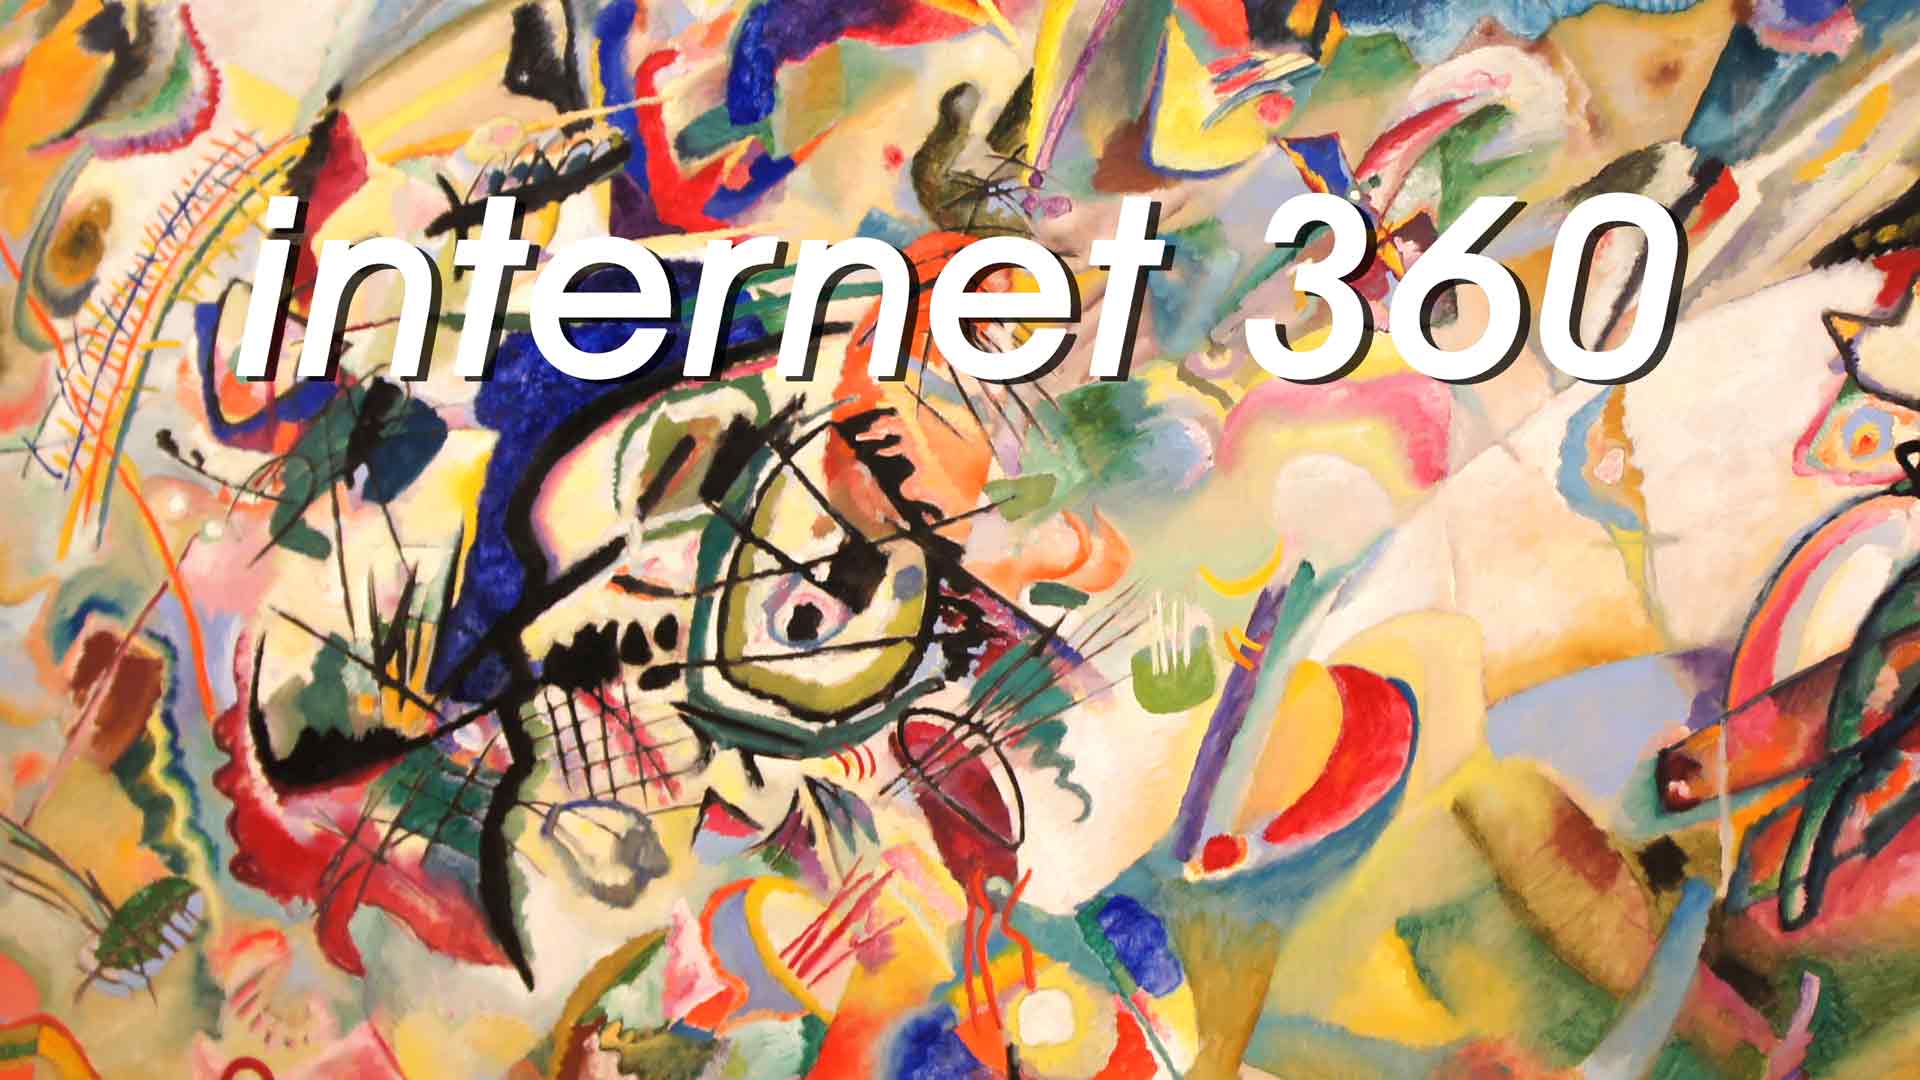 2internet360